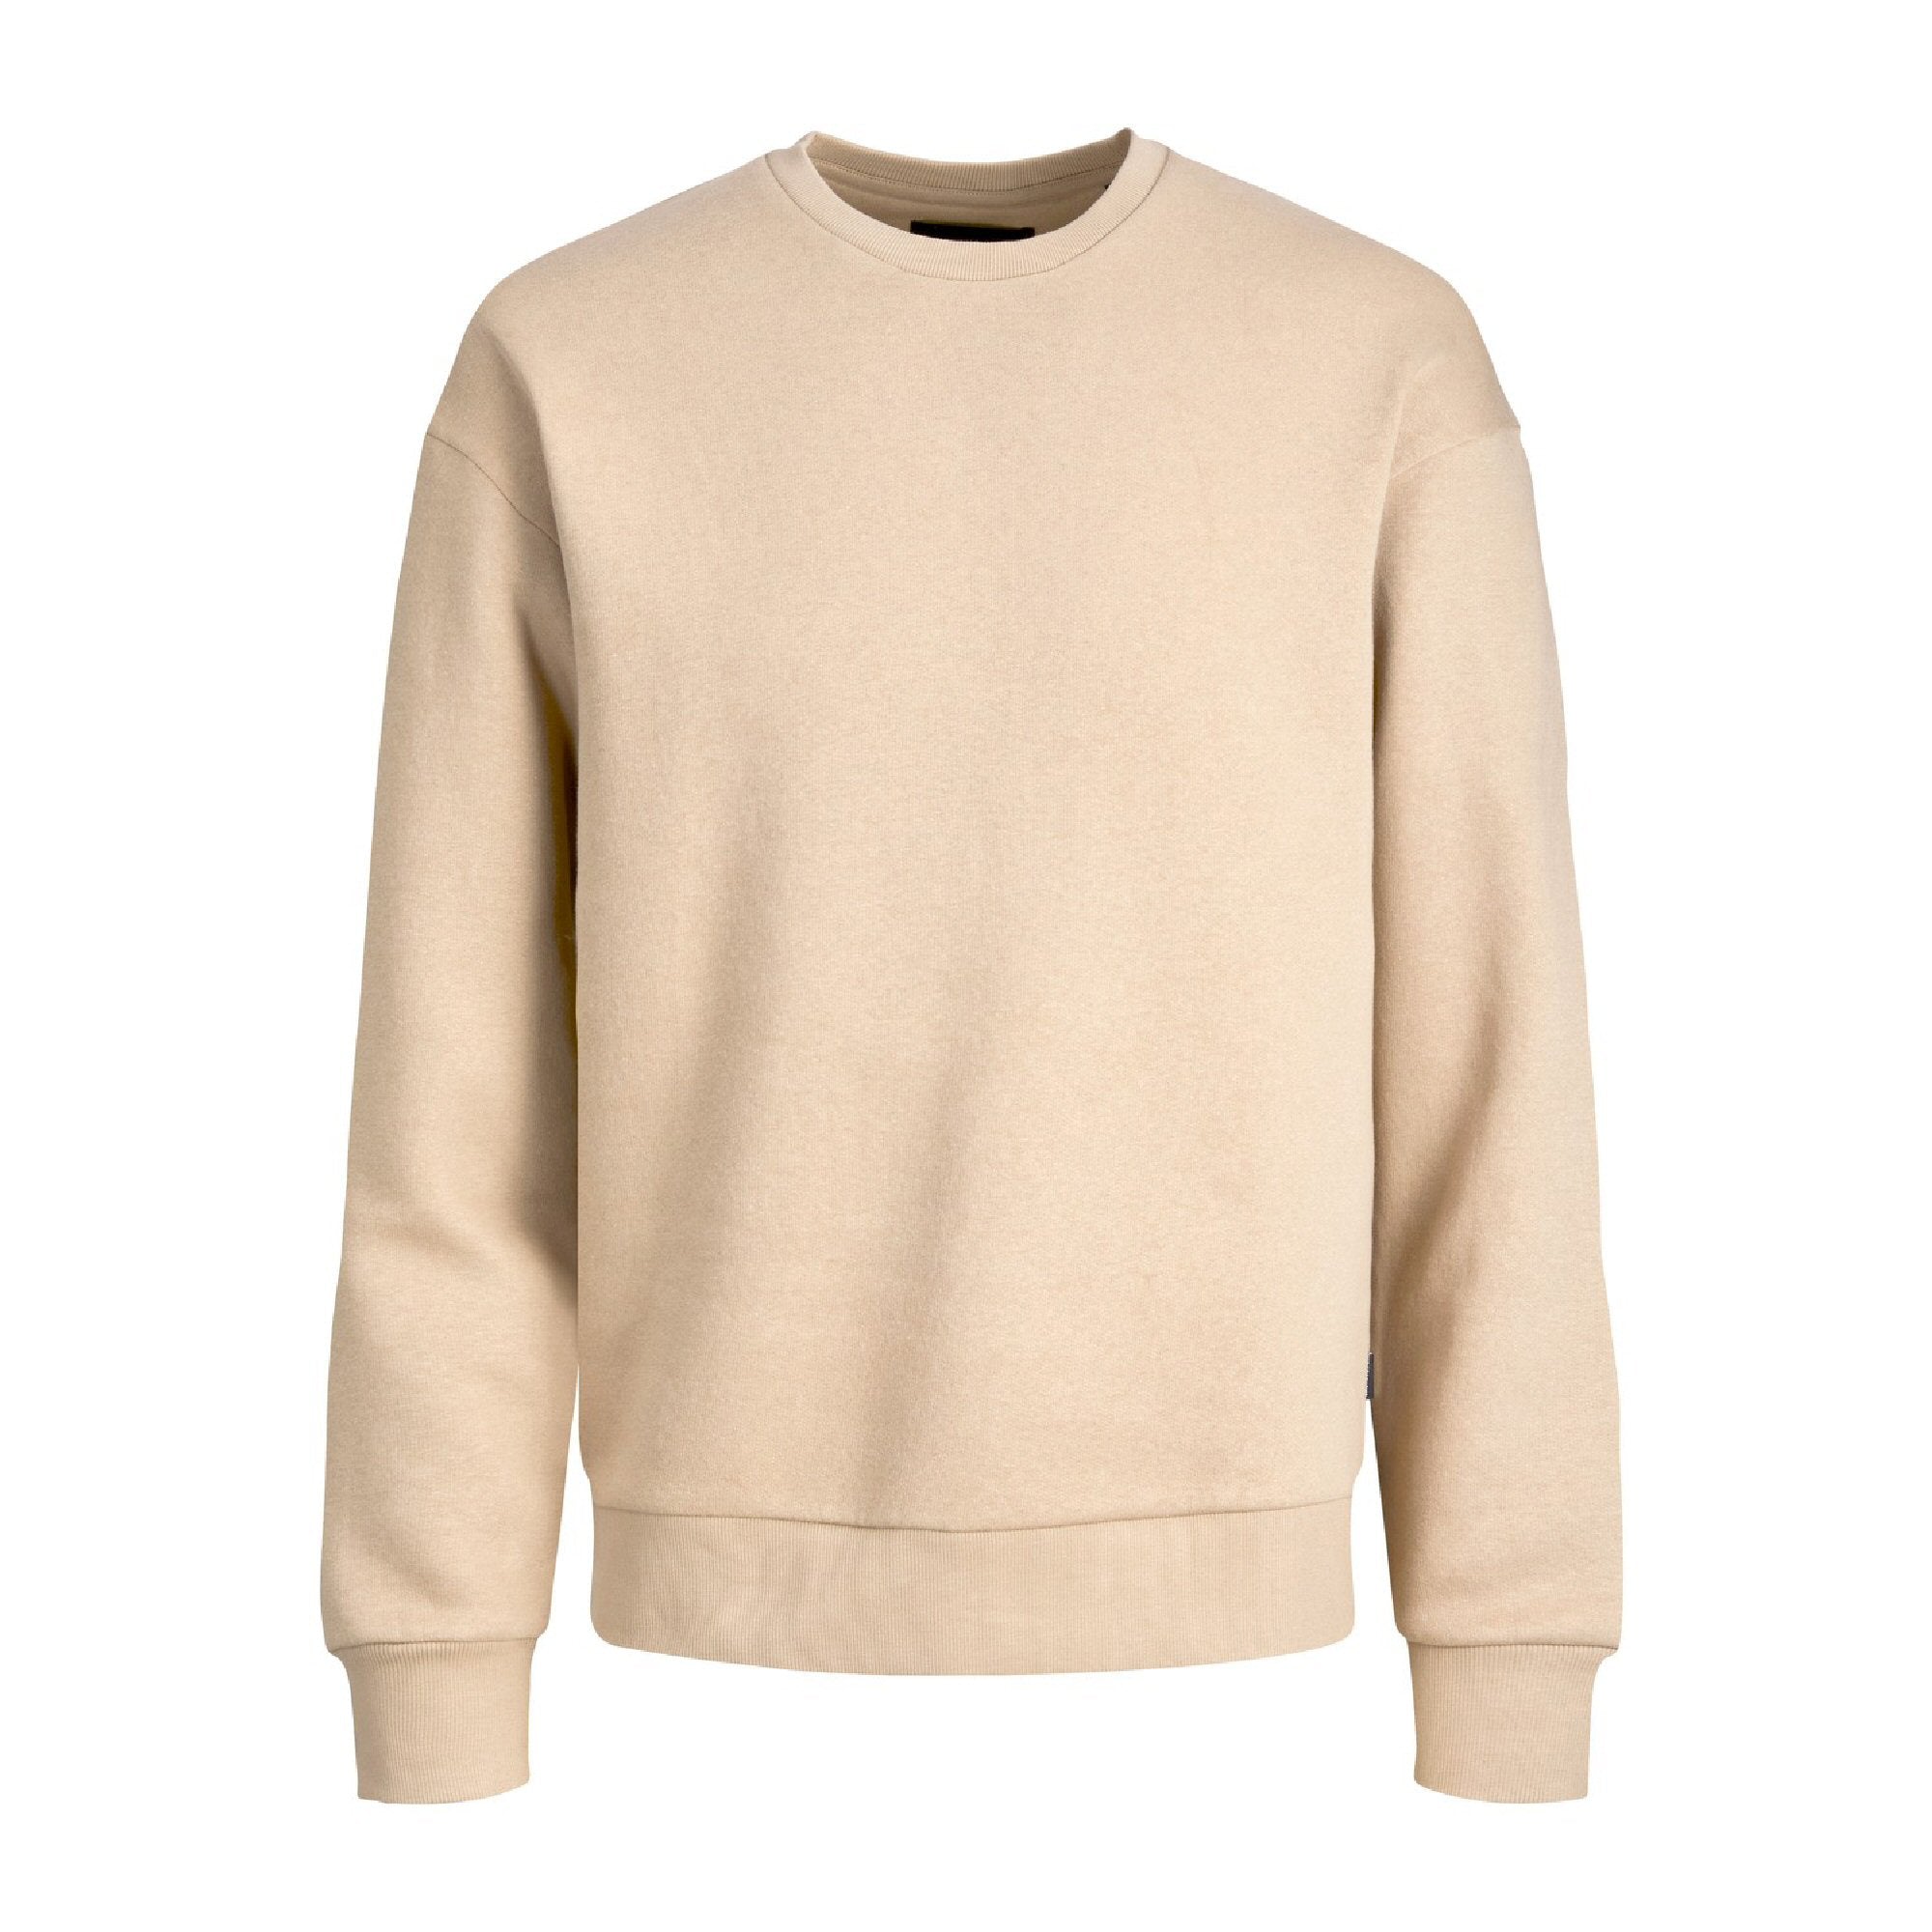 Jack & Jones Basic Super Soft Crewneck Sweater - Crockery